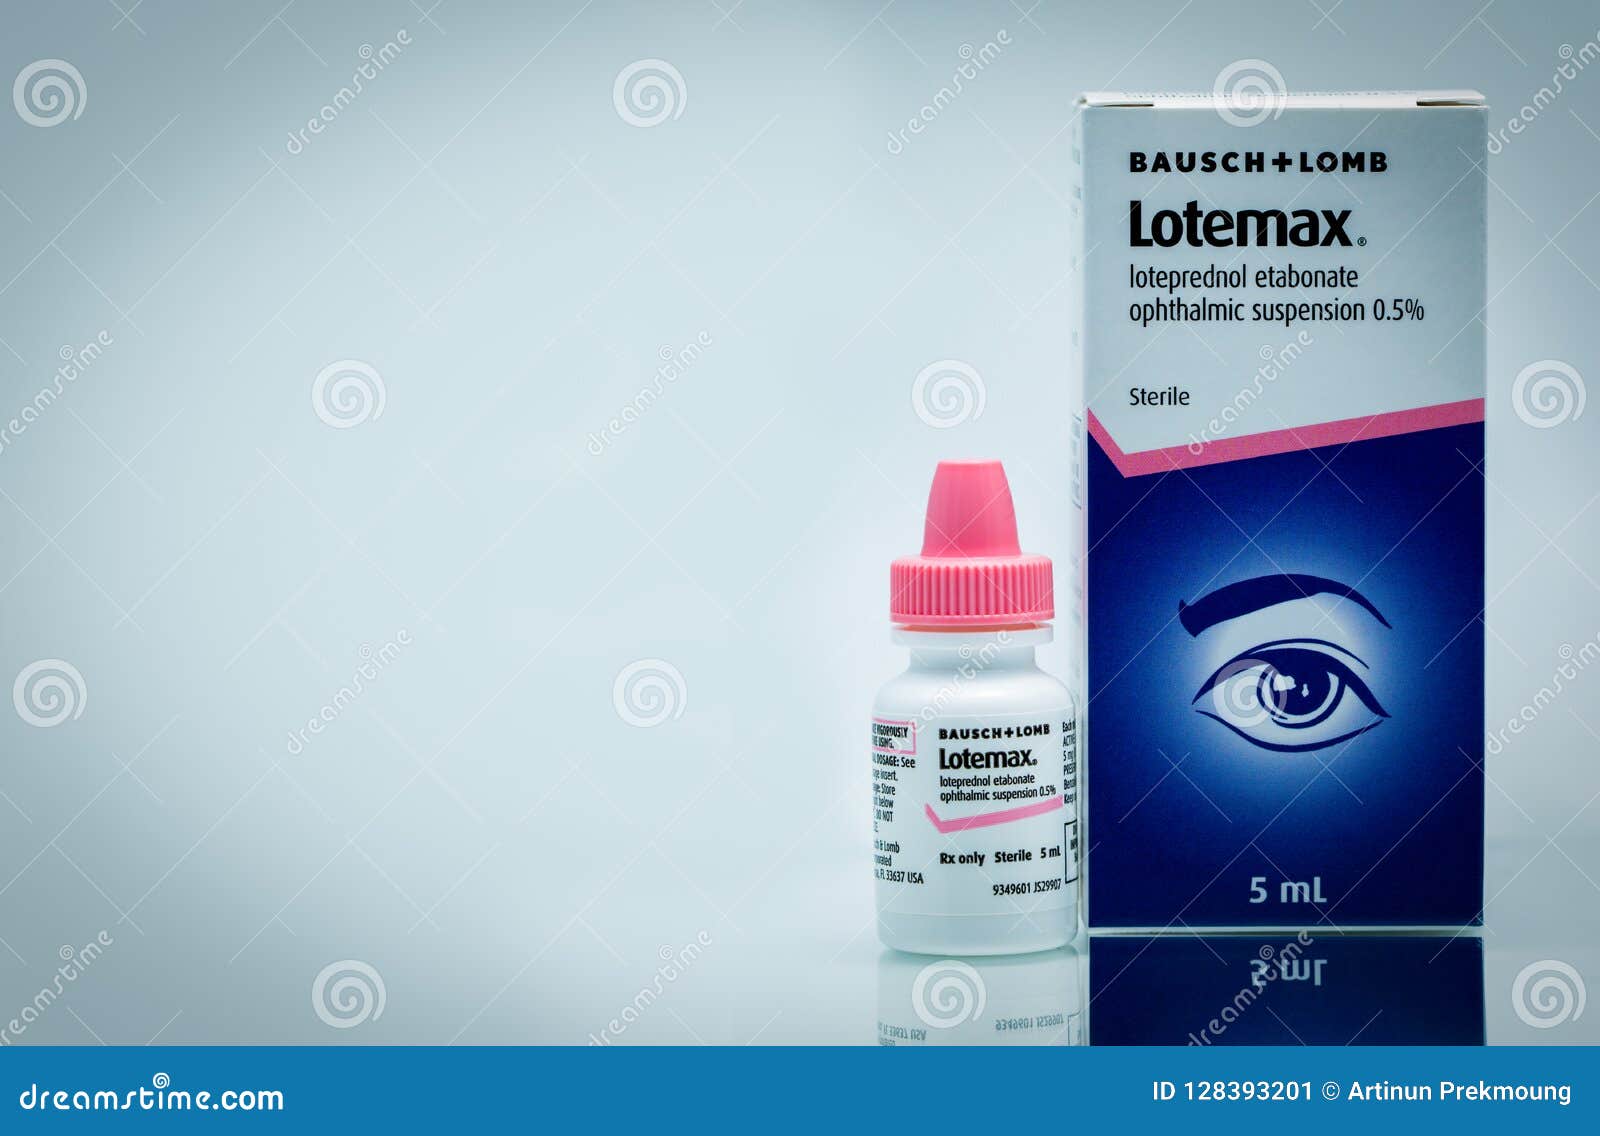 lotemax-5-ml-loteprednol-etabonate-pohthalmic-suspension-0-5-sterile